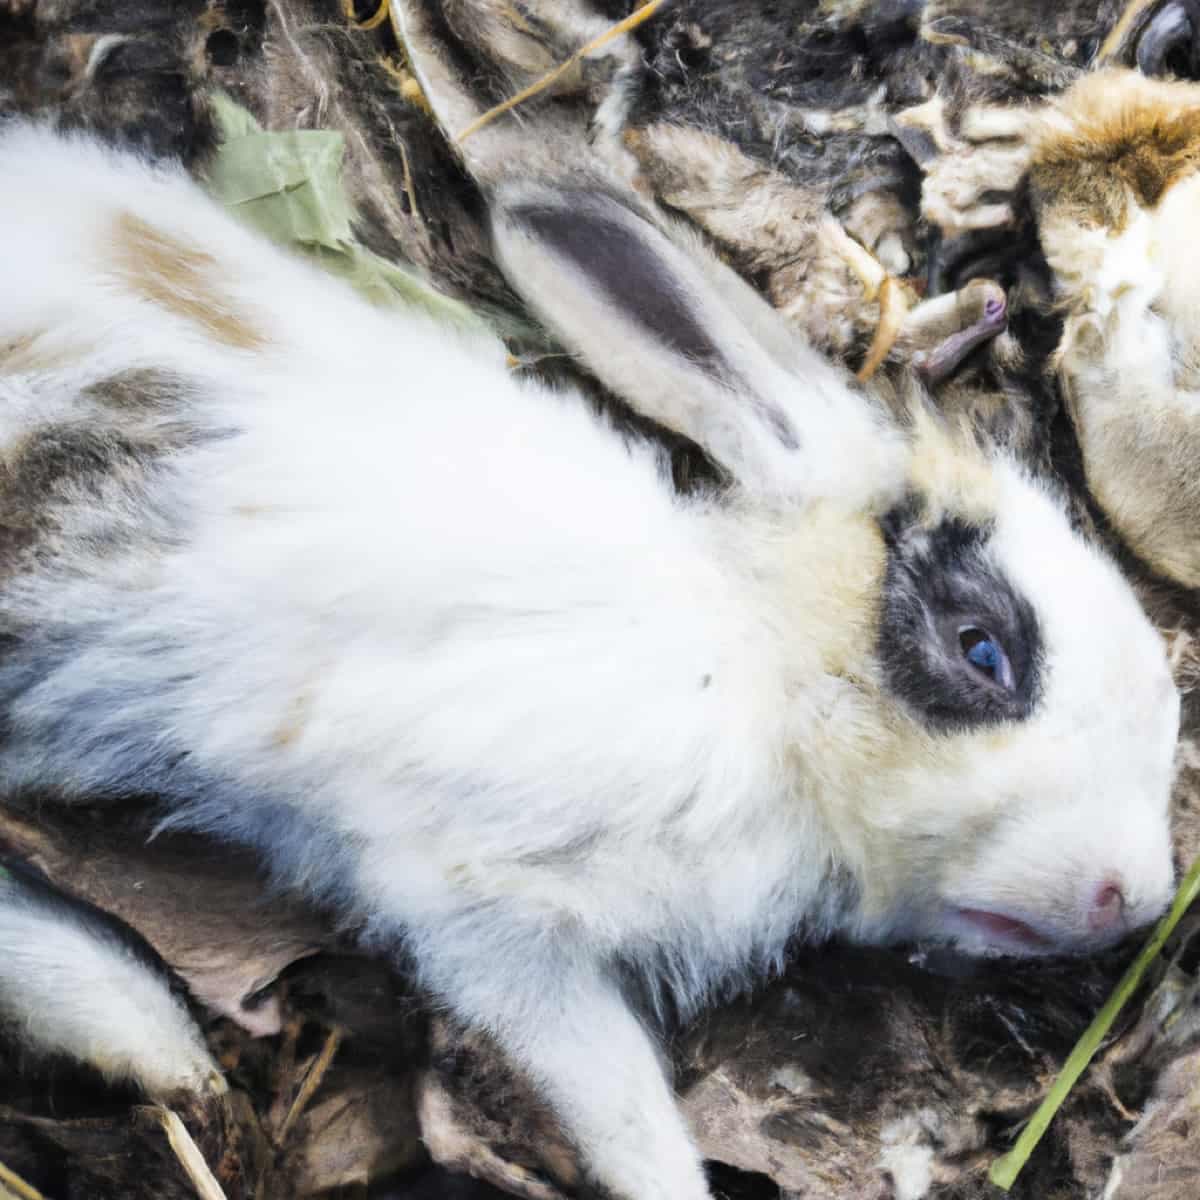 Rabbit Disease